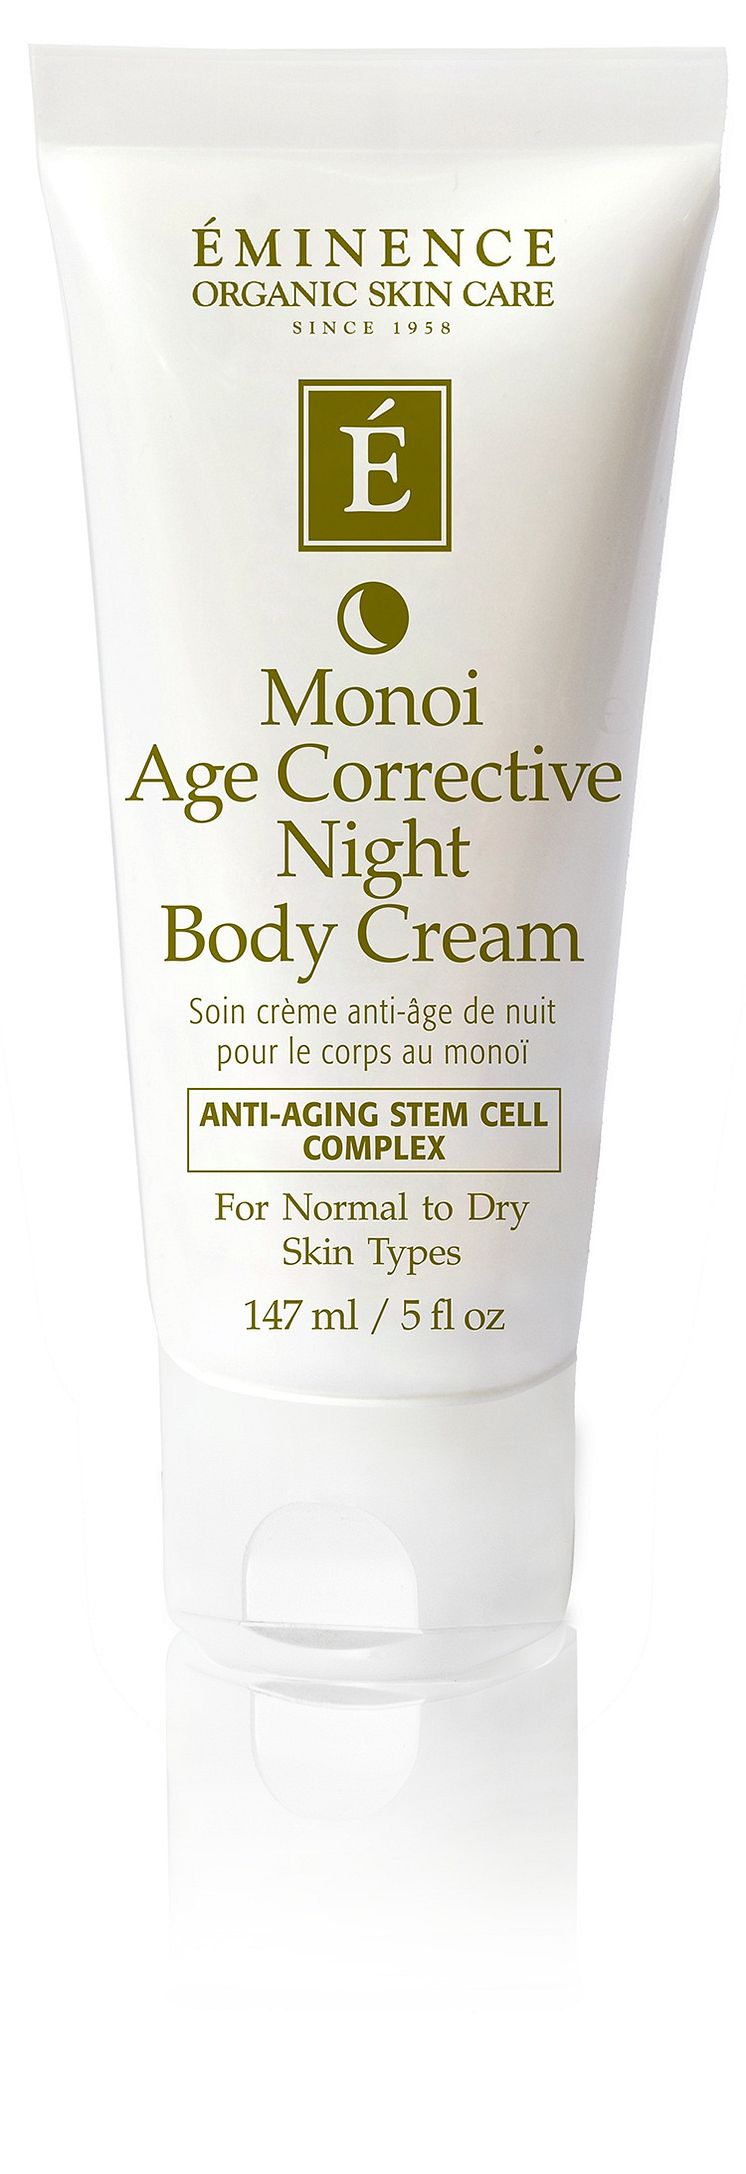 12274 Monoi Age Corrective Body Cream